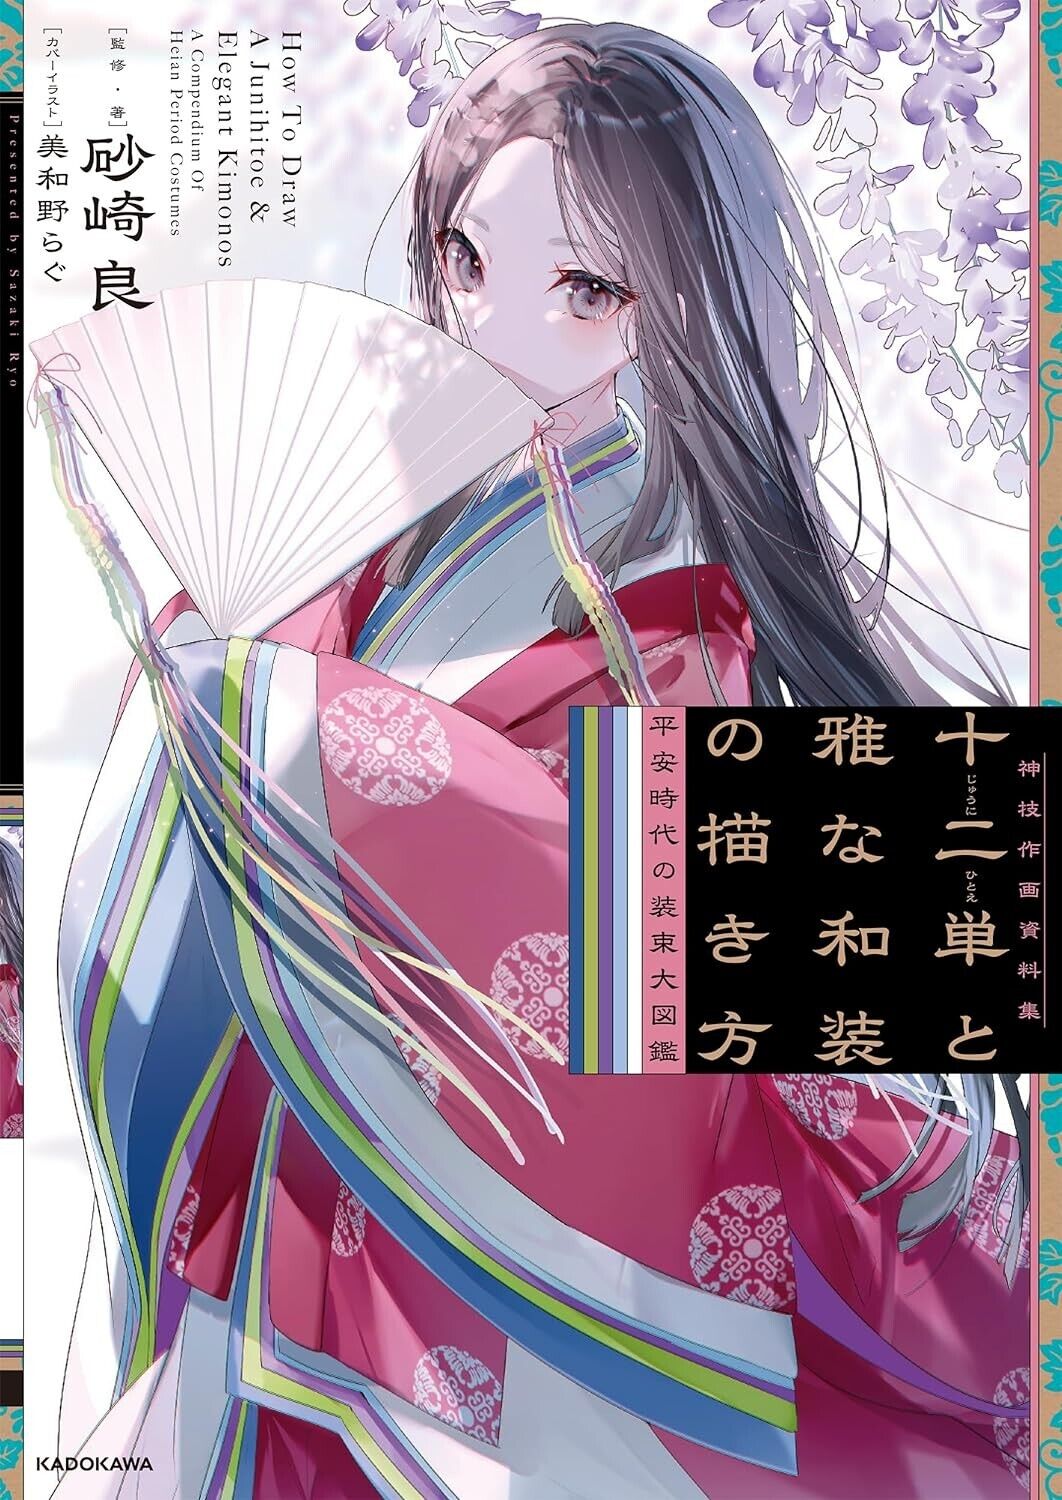 How To Draw A Junihitoe & Elegant Kimonos | JAPAN Art Guide Book Costume